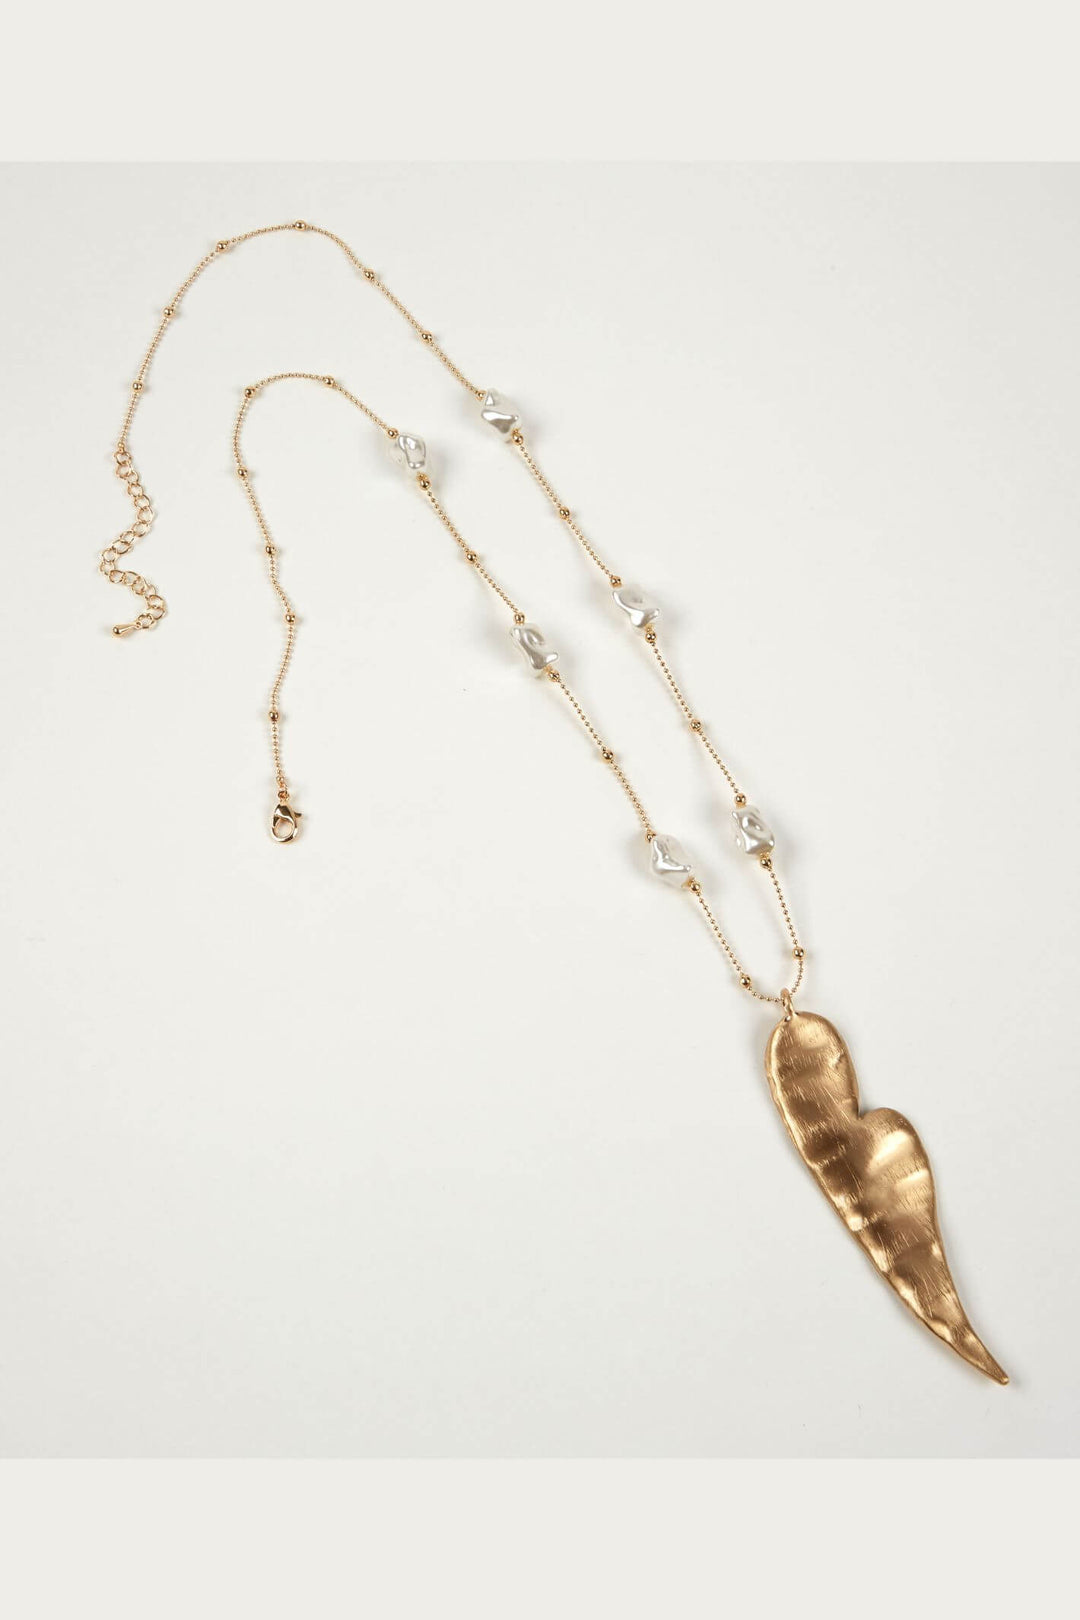 Dante NL48390 Gold Pearl & Leaf Drop Necklace